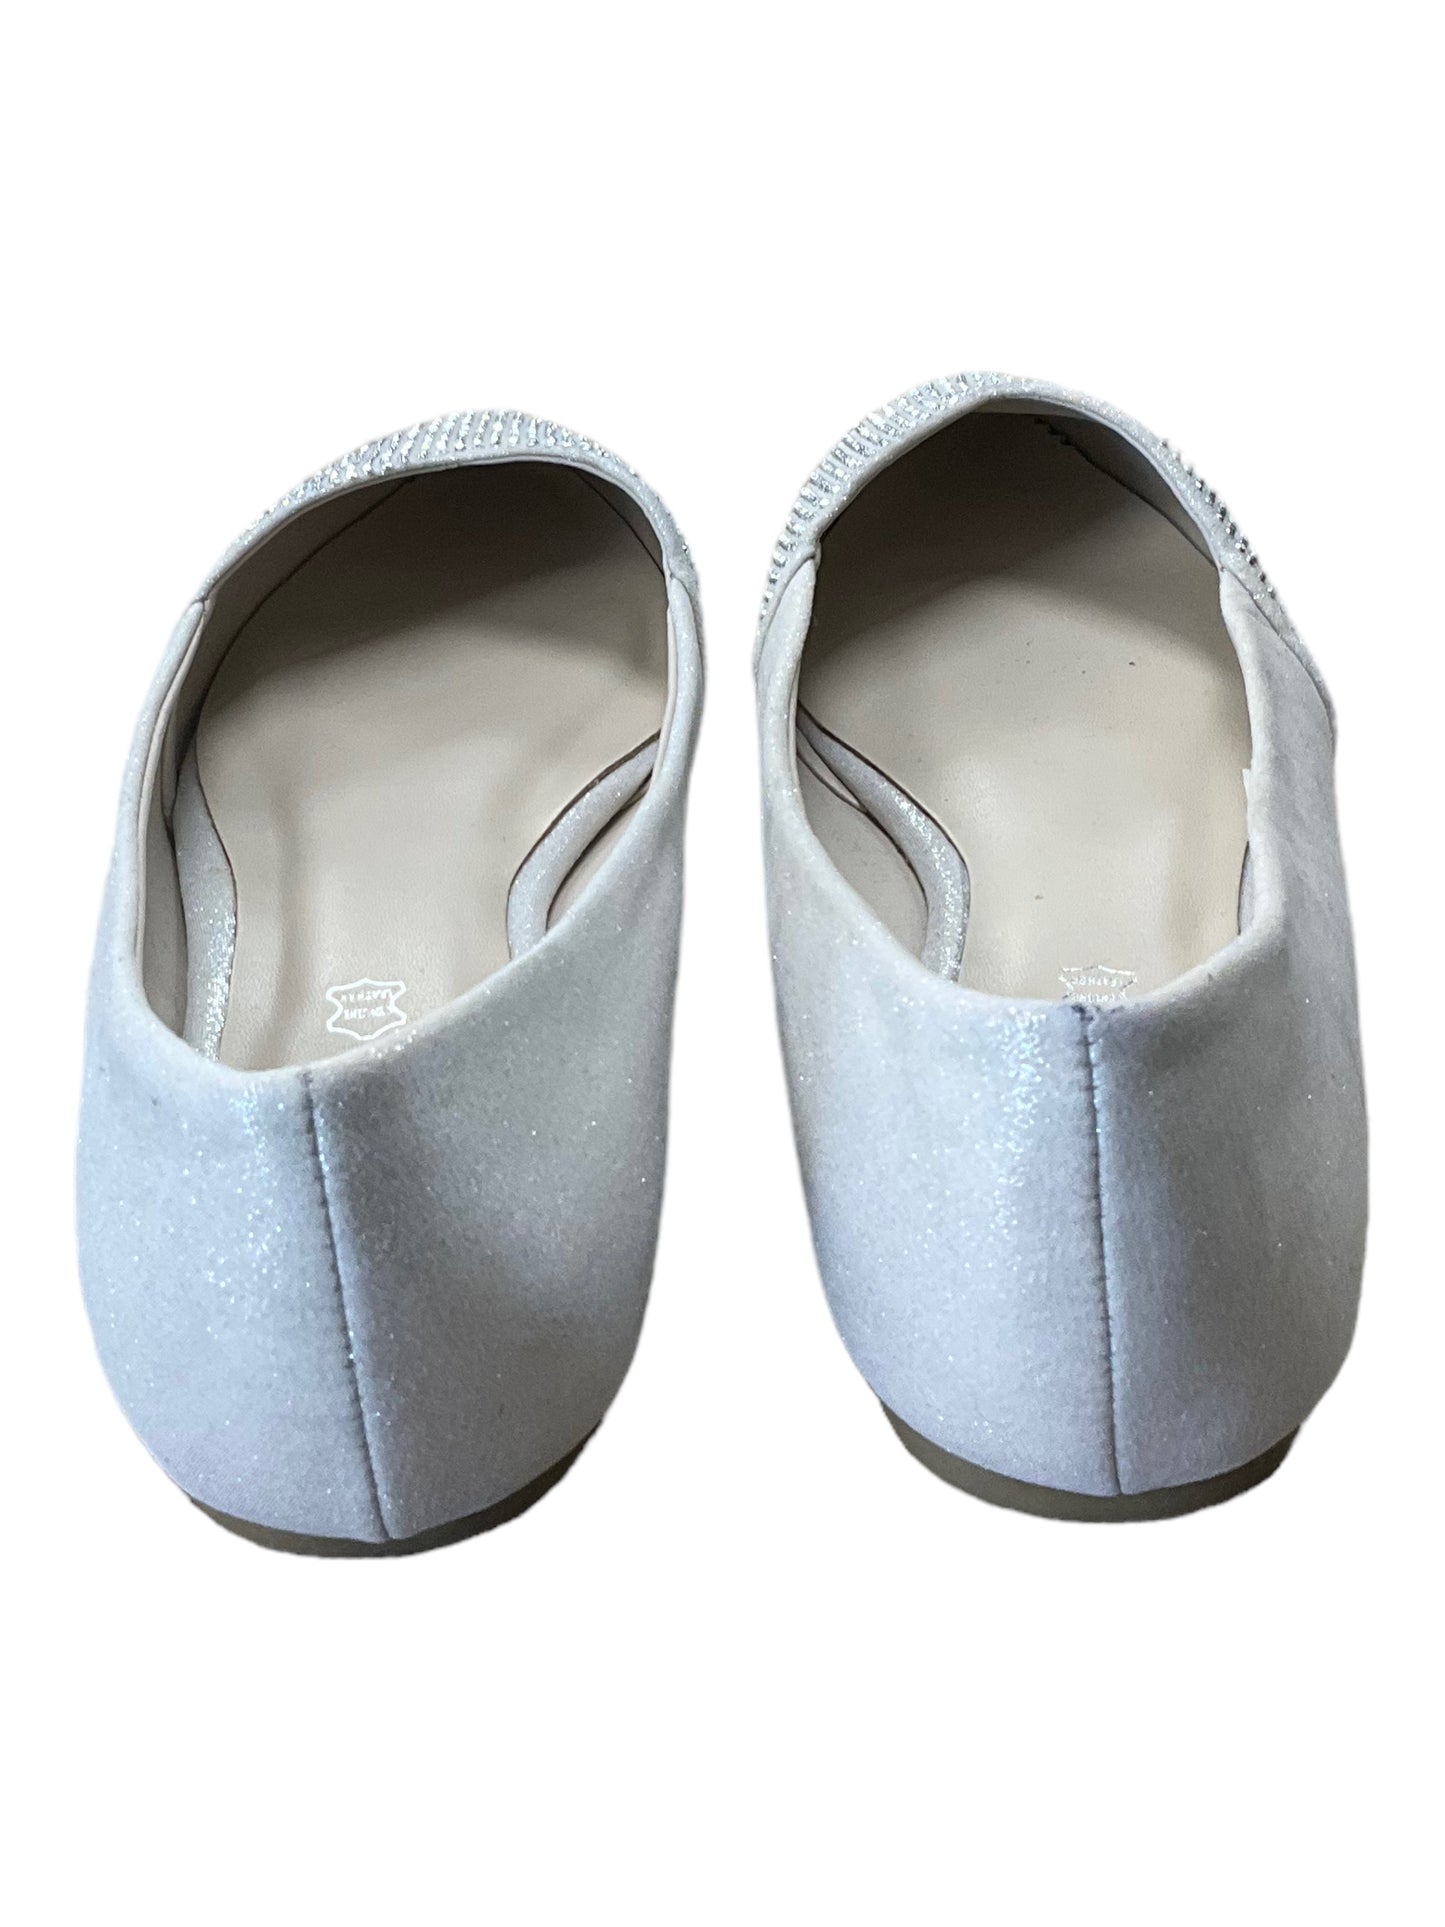 Shoes Flats Ballet By Aldo  Size: 9